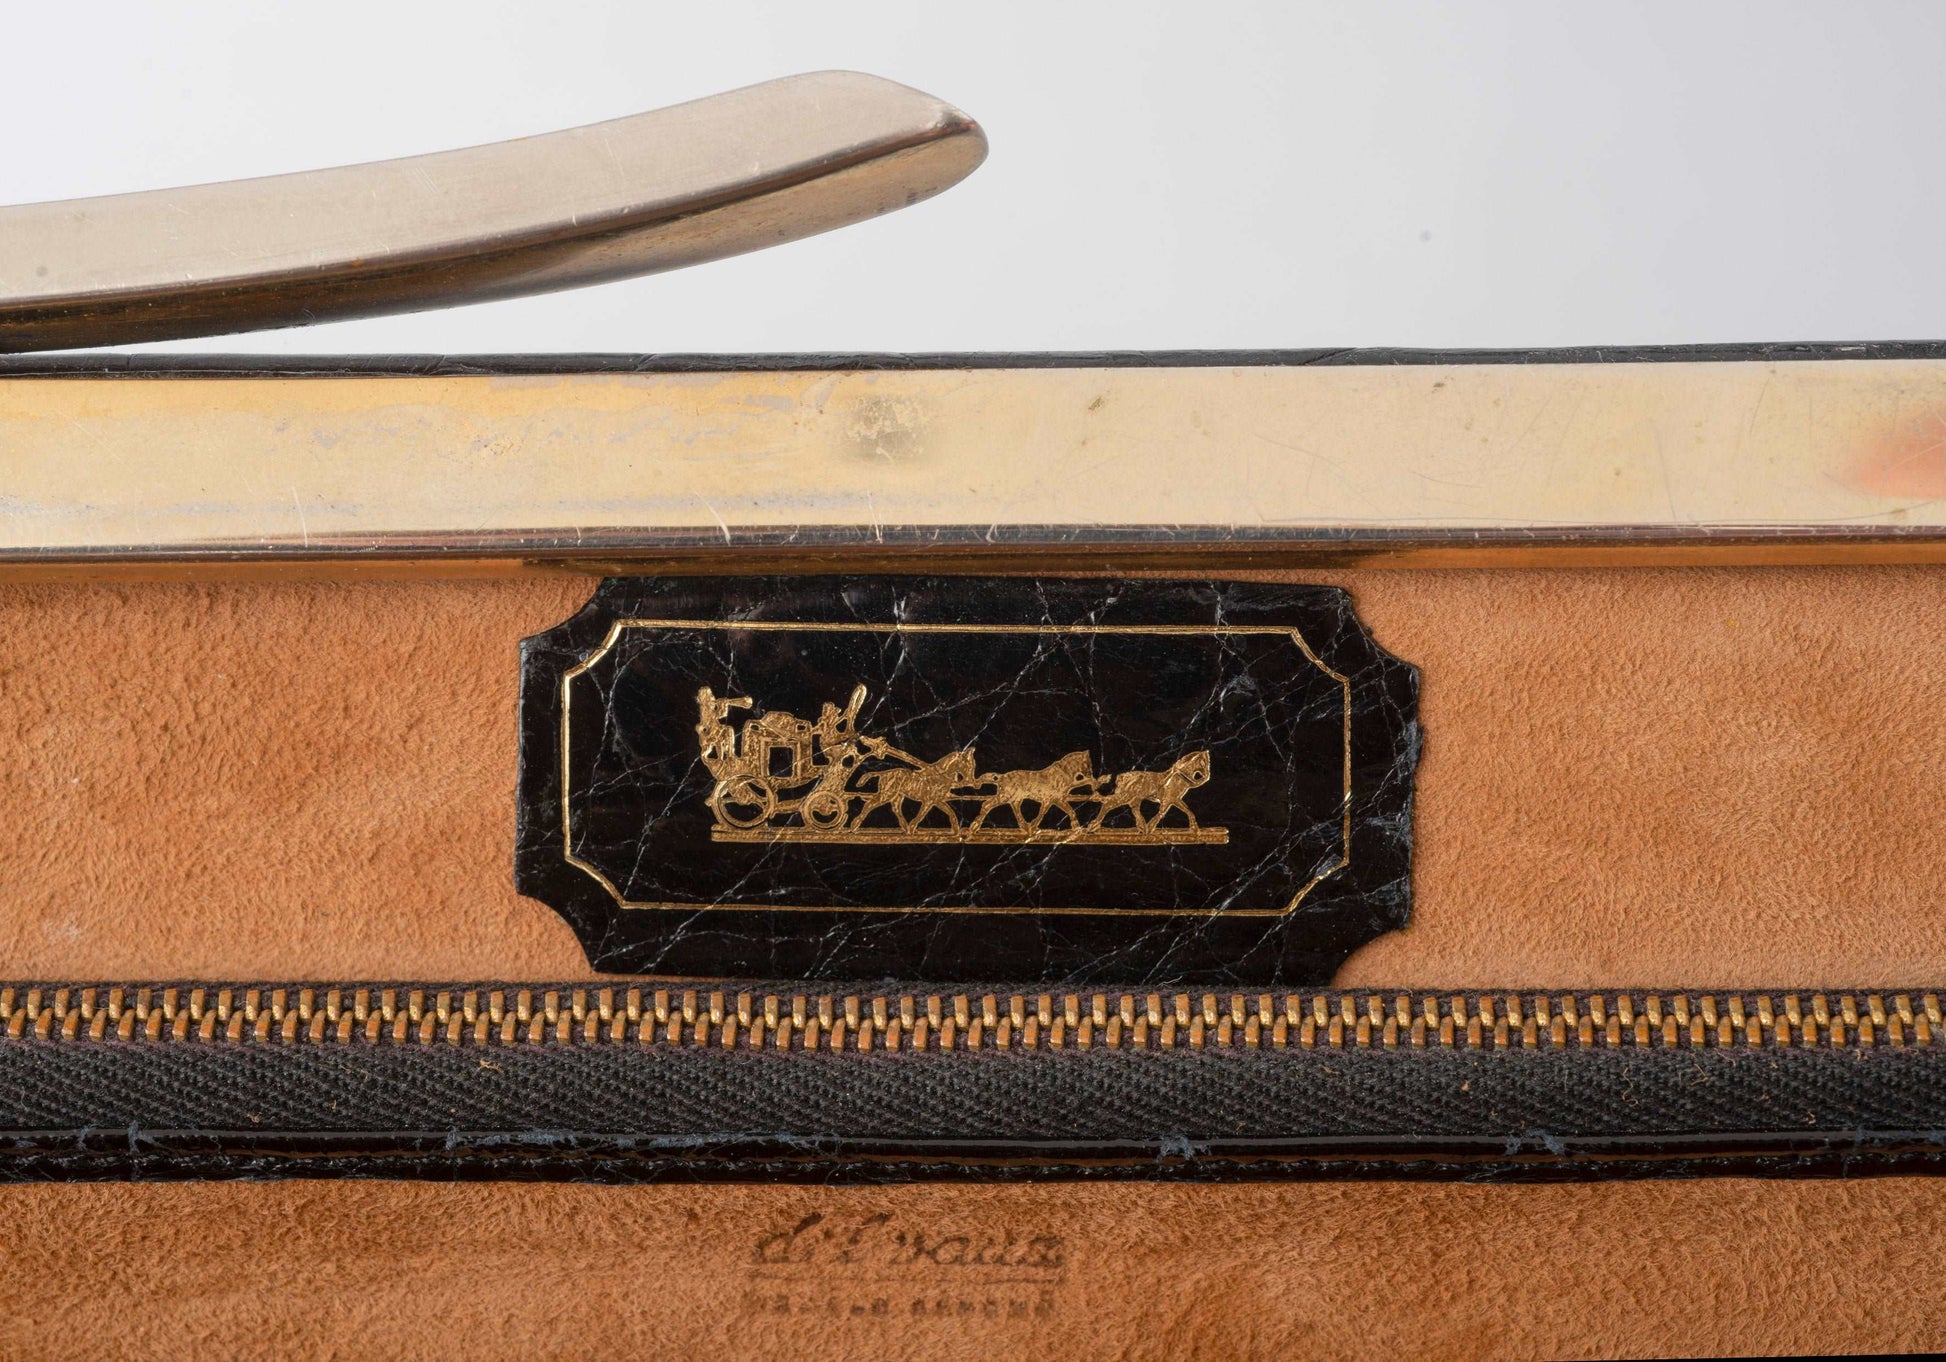 Sold at Auction: Vintage Delvaux handbag in crocodile